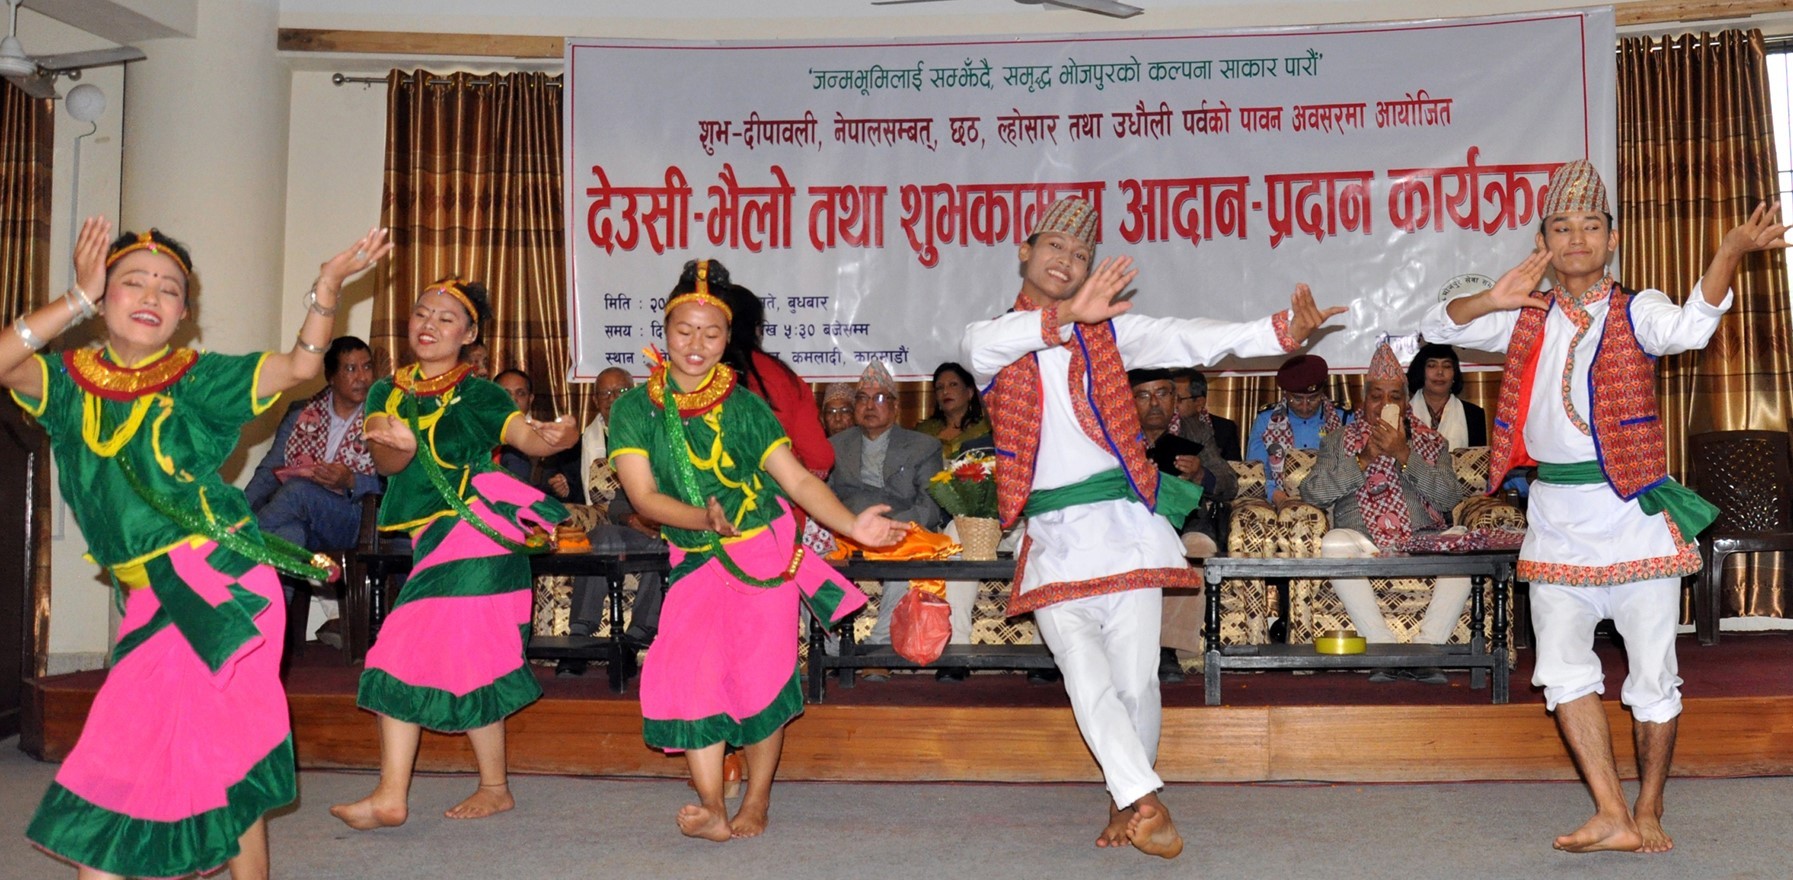 artists-are-performing-dance-at-greetings-exchange-programme-in-kathmandu